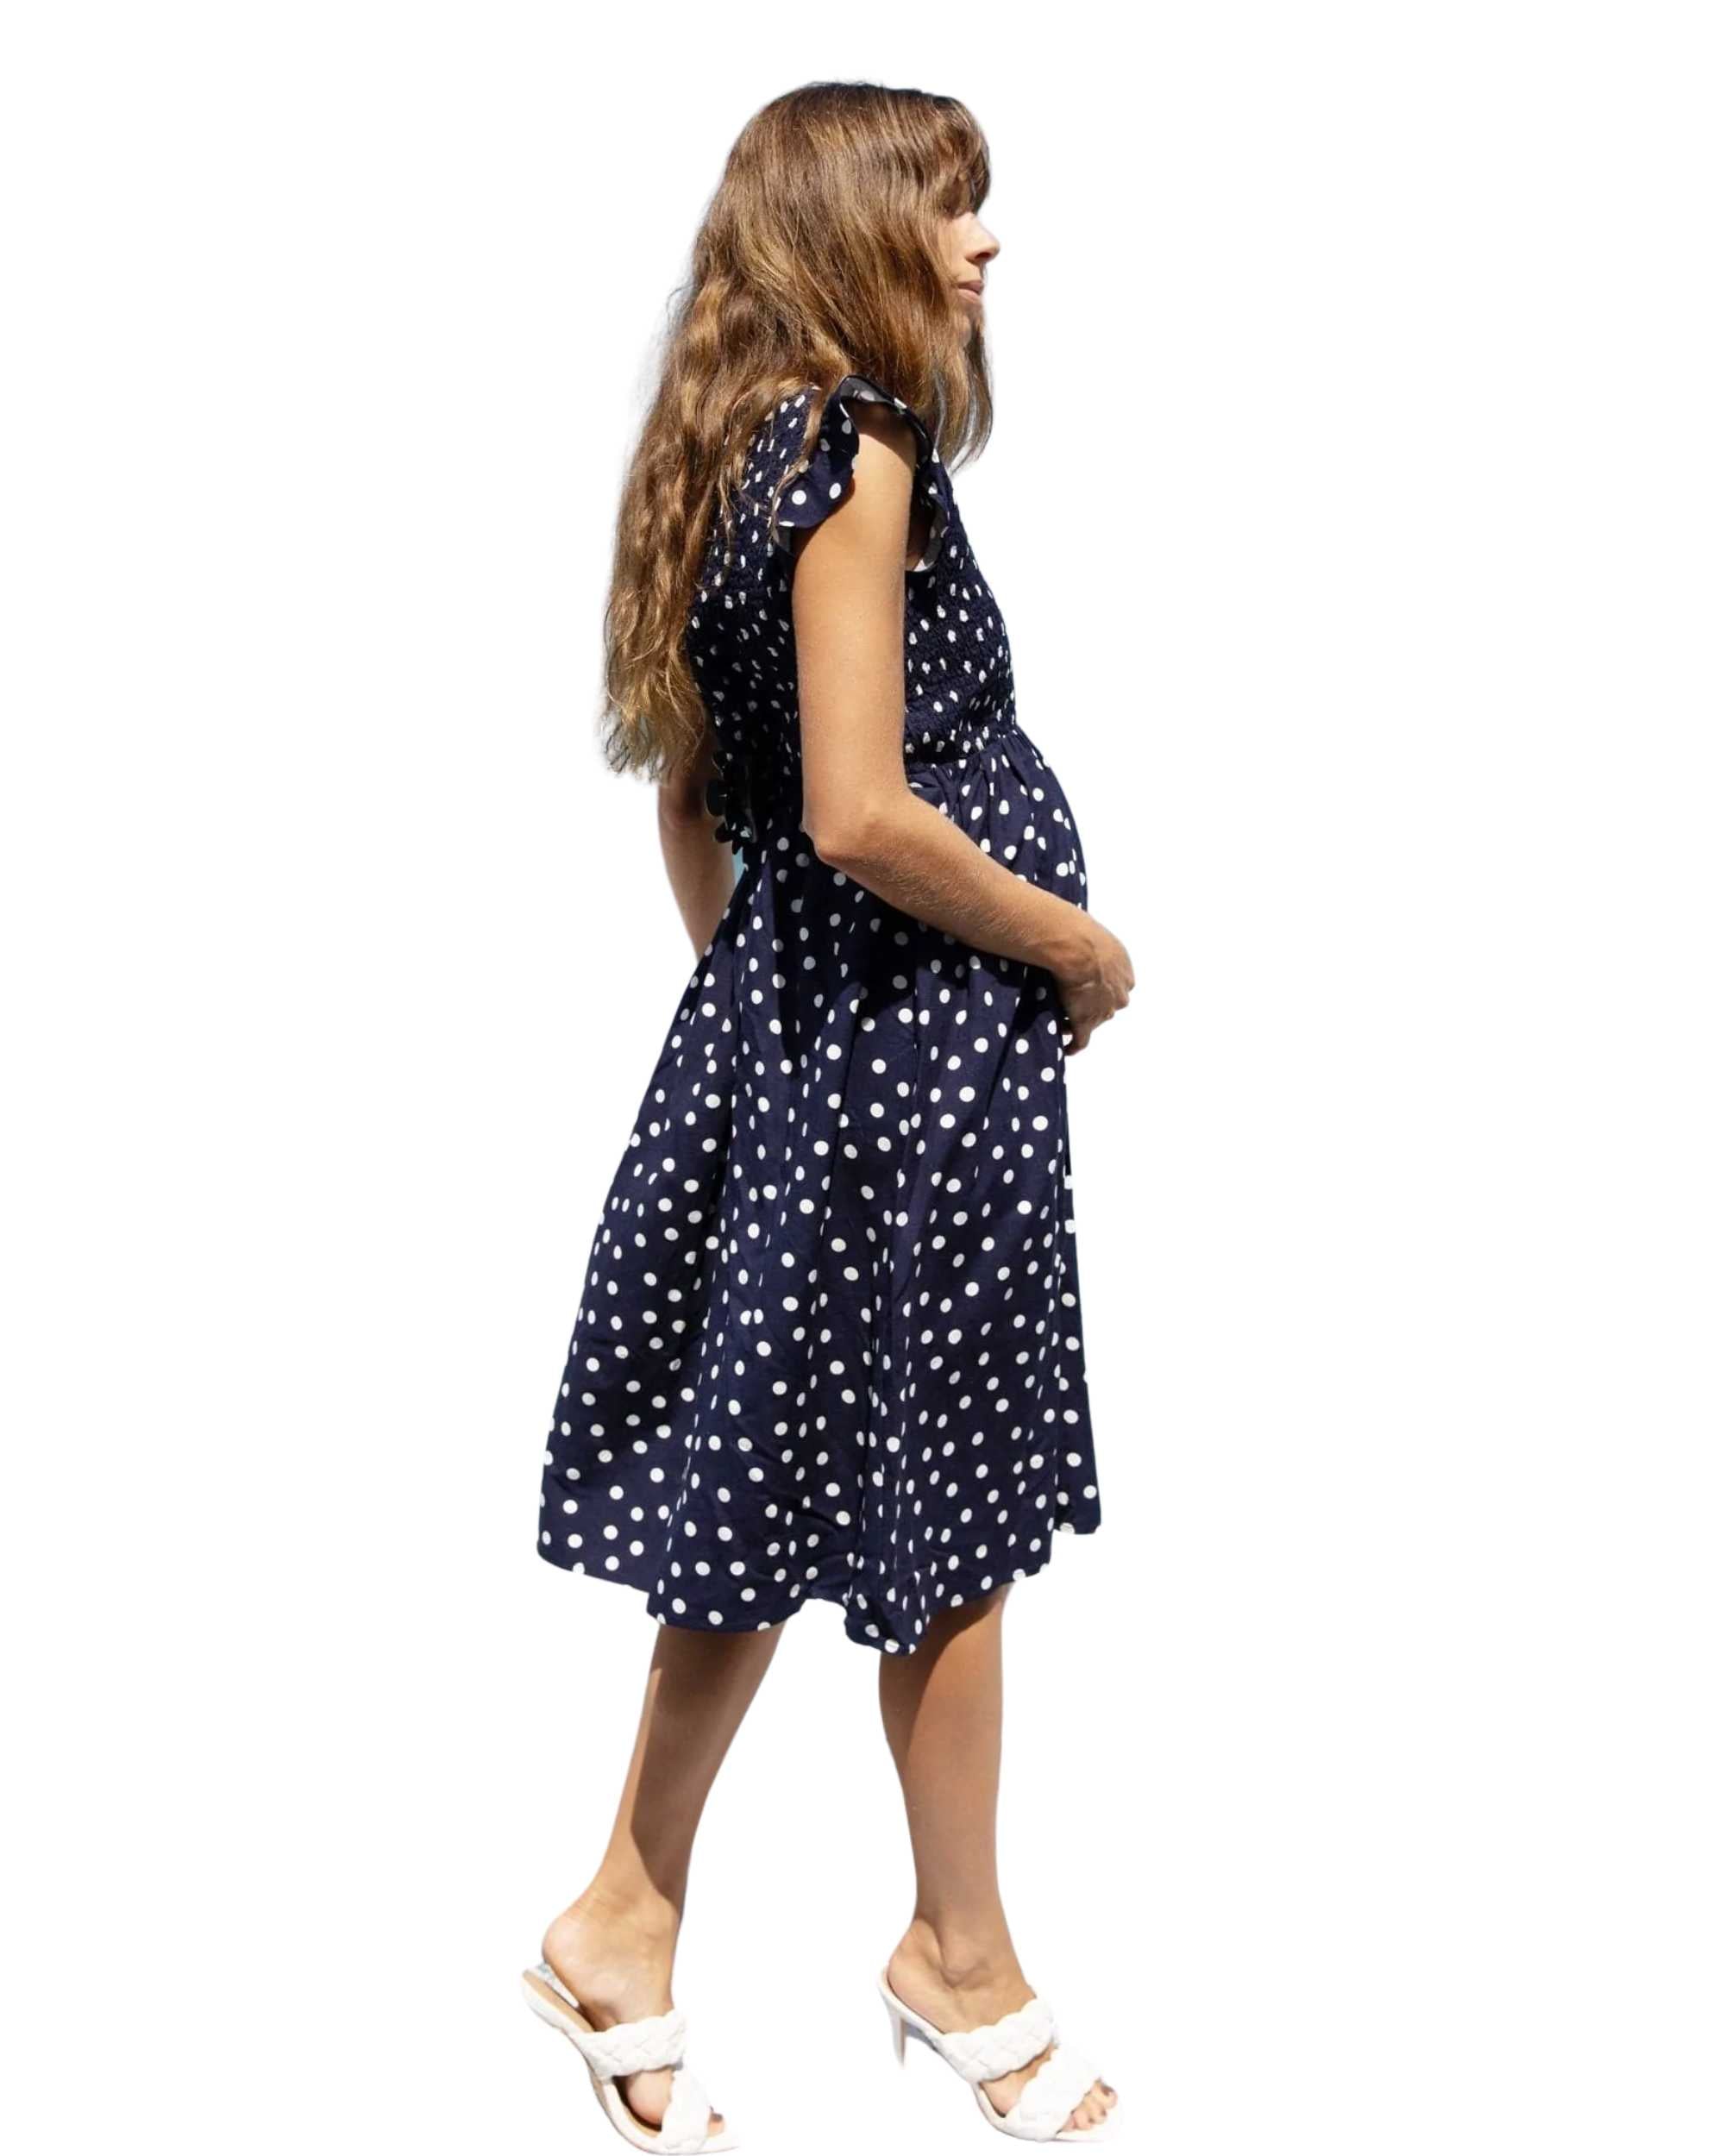 Angel Maternity 'Donna' Linen Dress - Navy Polkadot